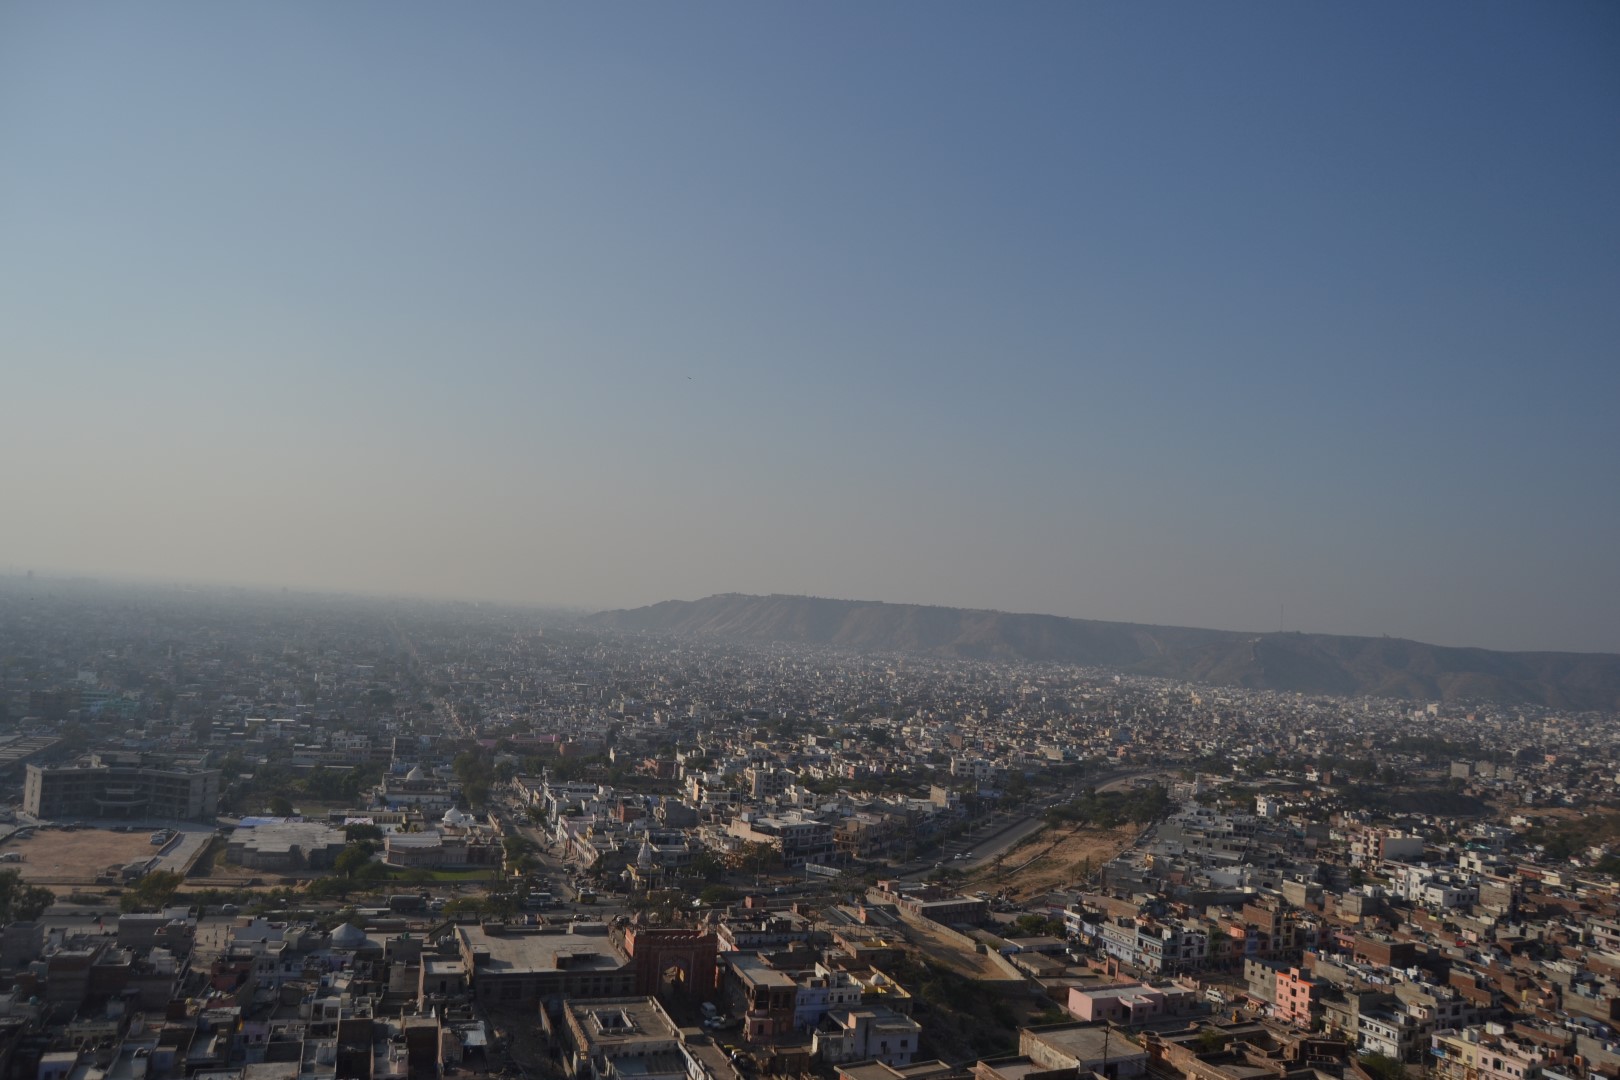 Overlooking Jaipur